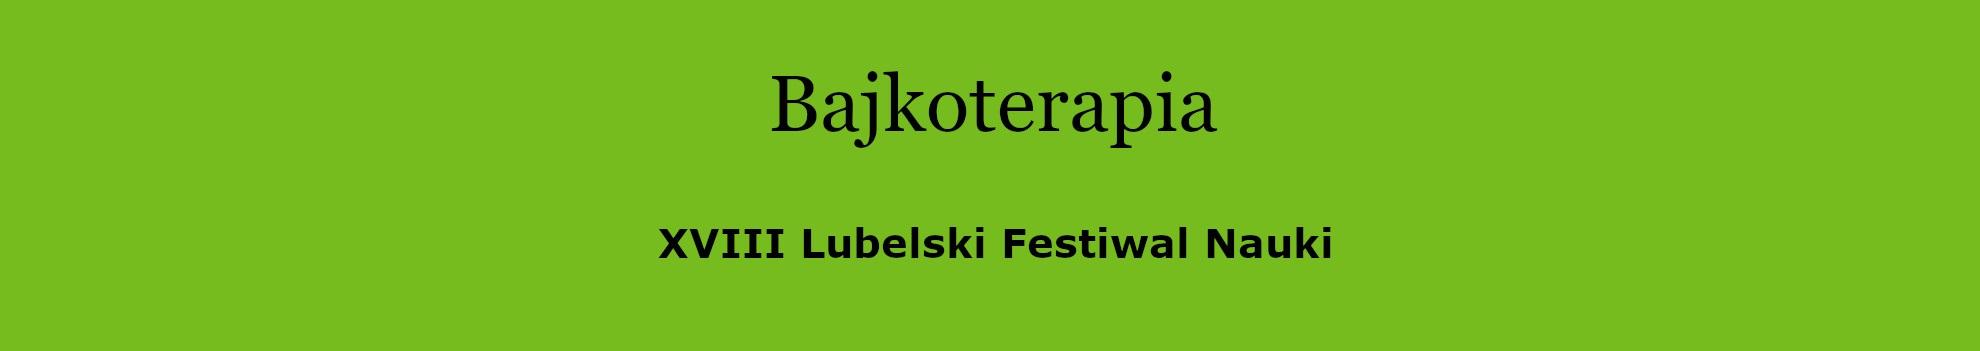 Bajkoterapia XVIII Lubelski Festiwal Nauki